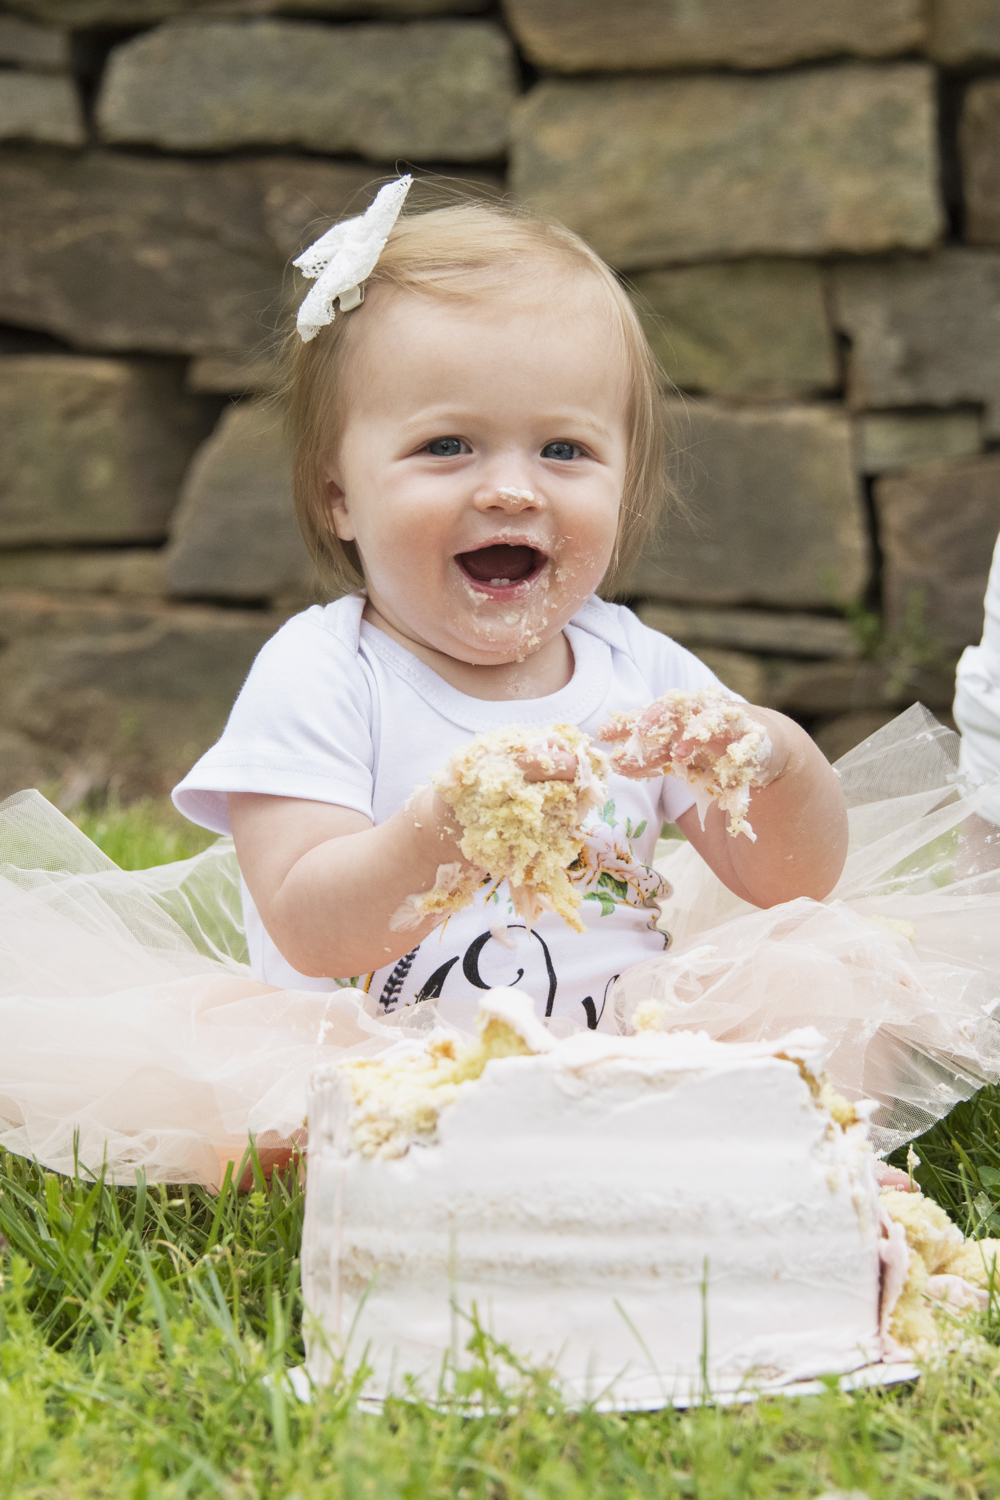 One year old birthday girl eating cake in tutu